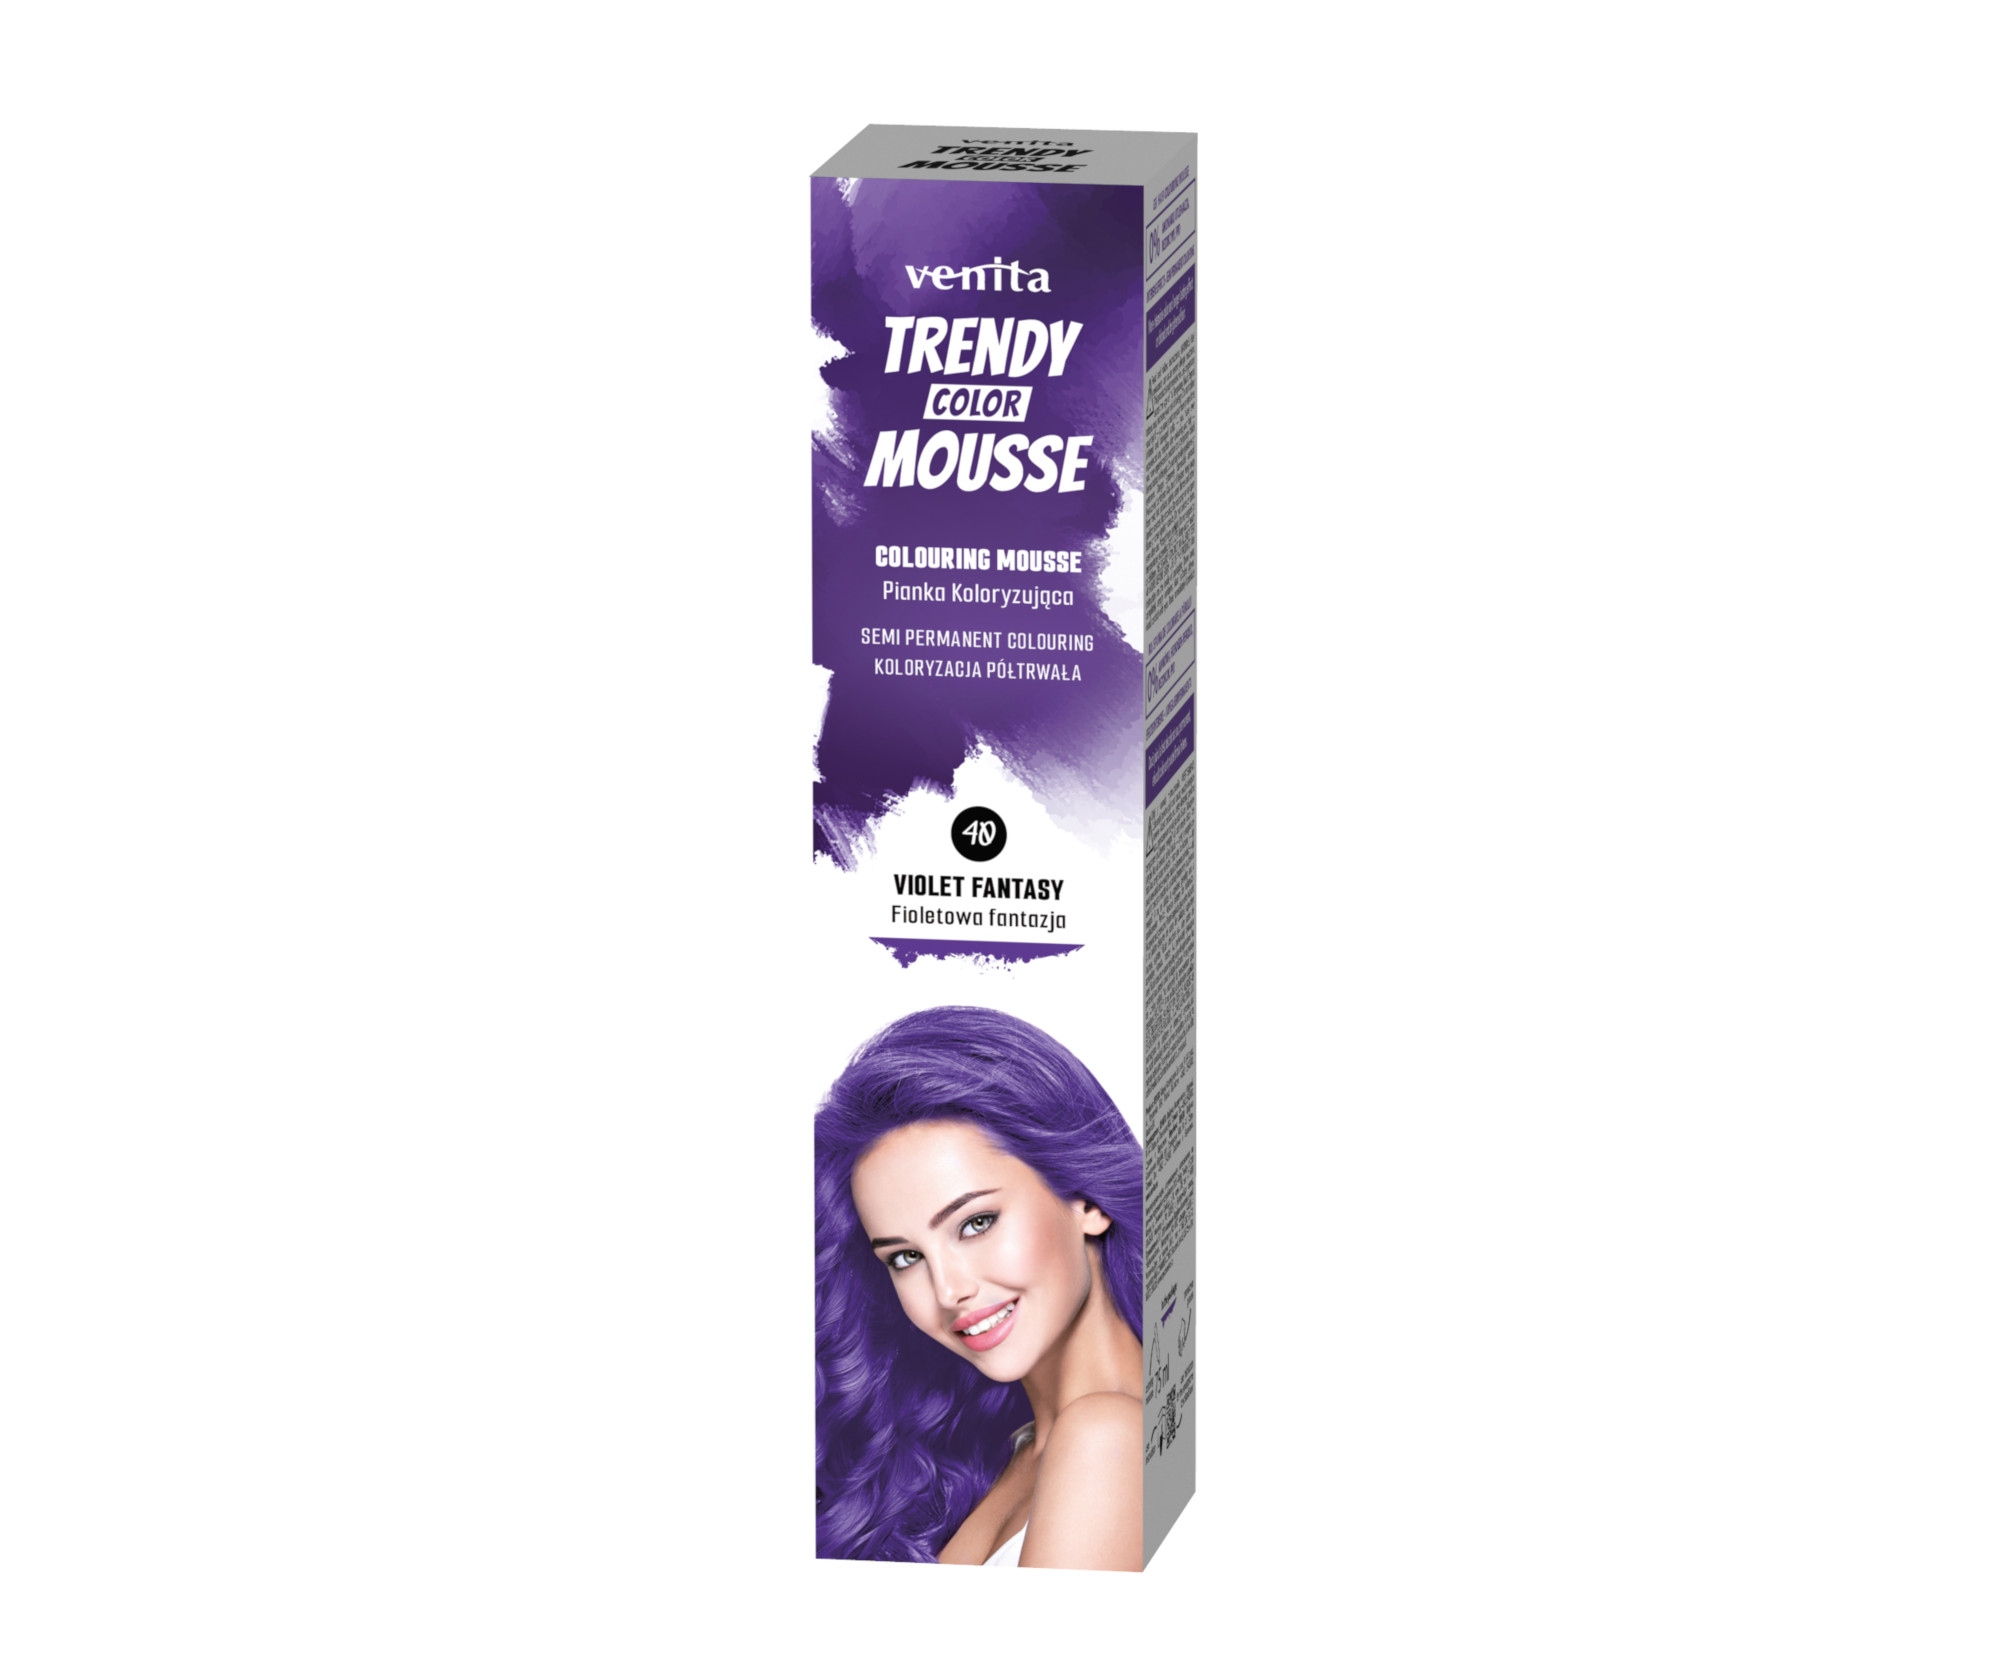 Barevné pěnové tužidlo Venita Trendy Color Mousse Violet Fantasy - 75 ml, fialová (40VF)